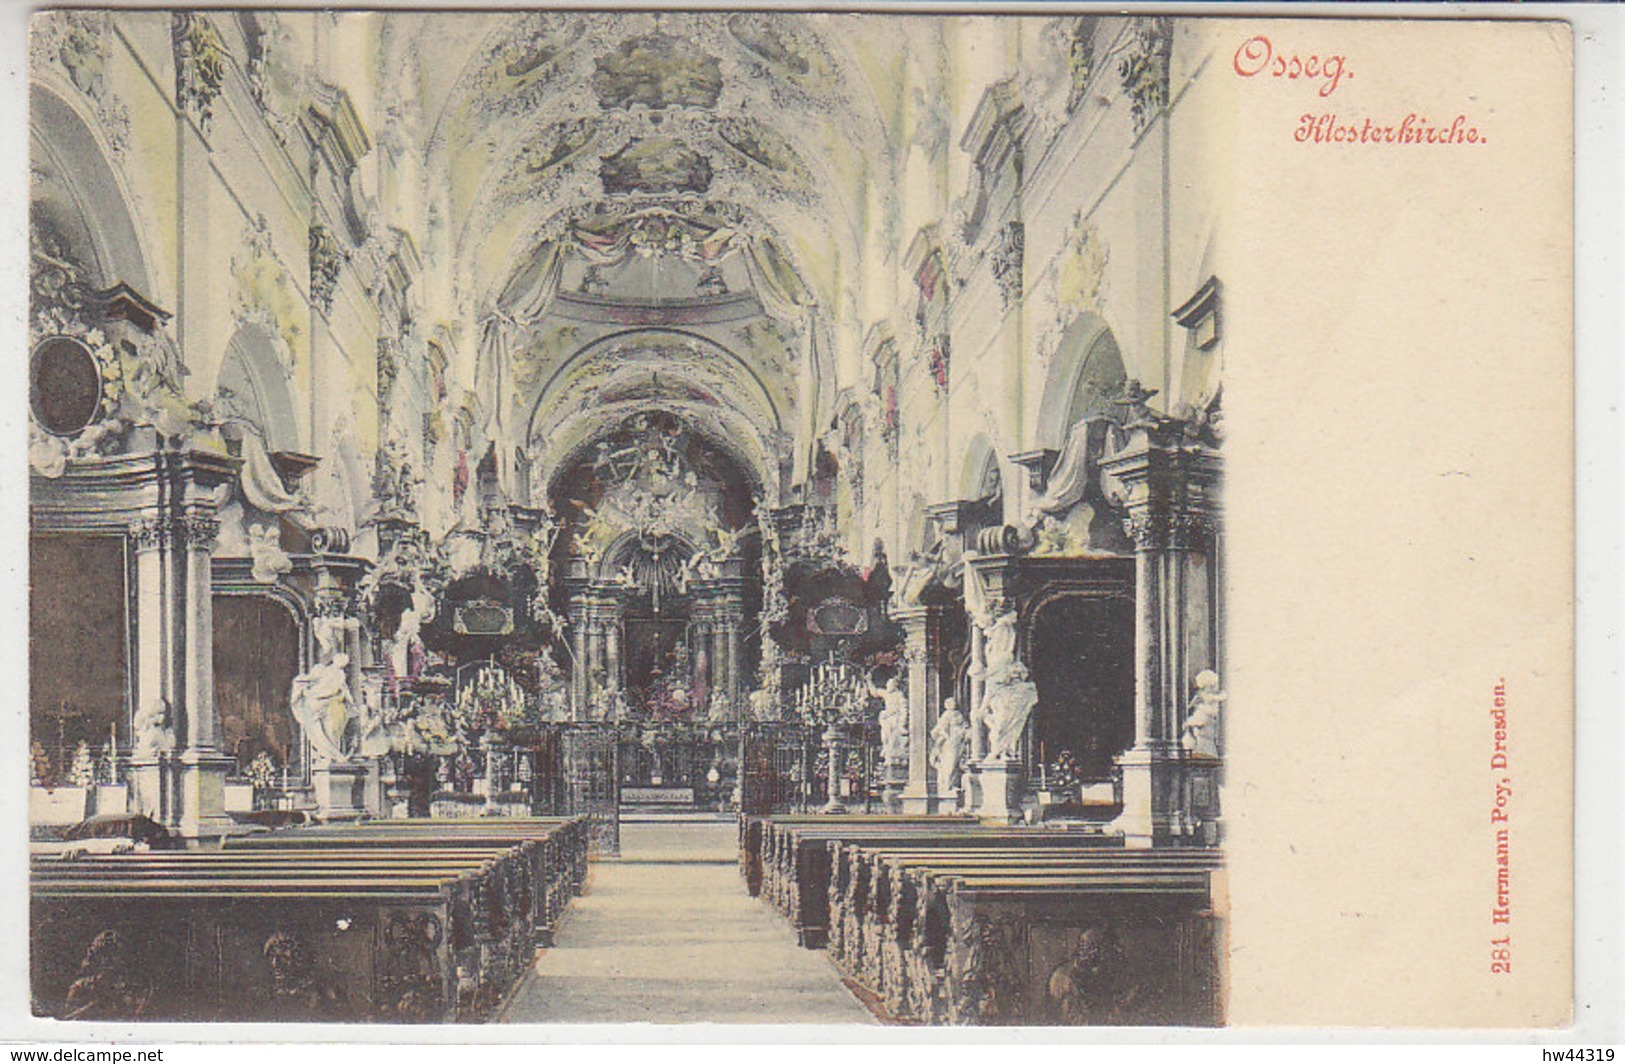 Osseg - Klosterkirche - Innenansicht - Um 1900 - Tschechische Republik